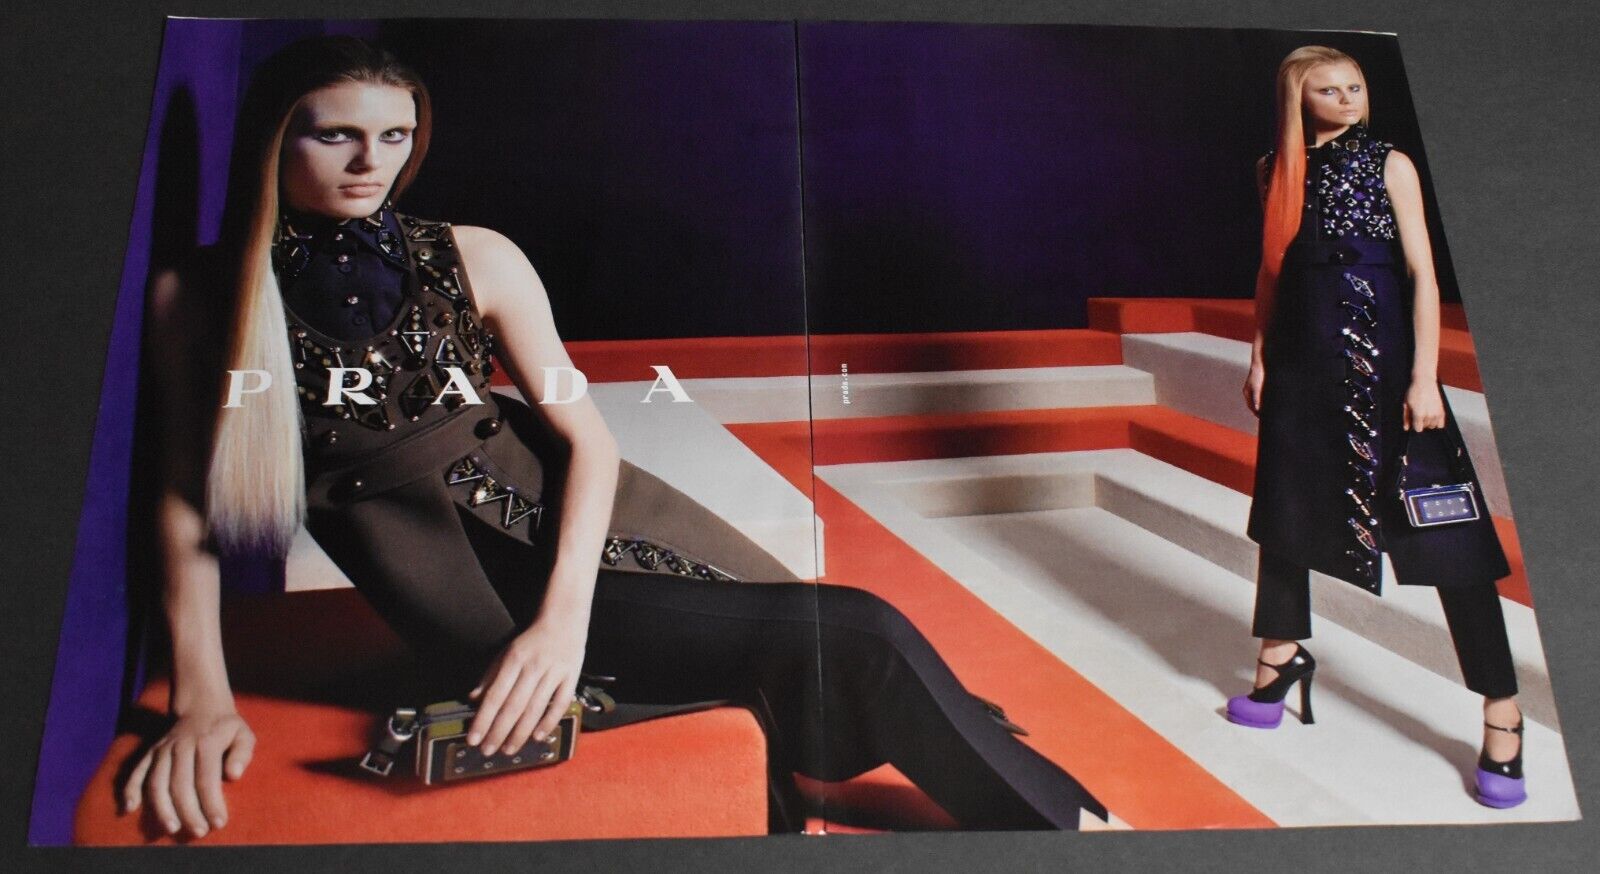 2012 Print Ad Clothing Fashion Style Art Heels Prada Dress Purse Purple Heels